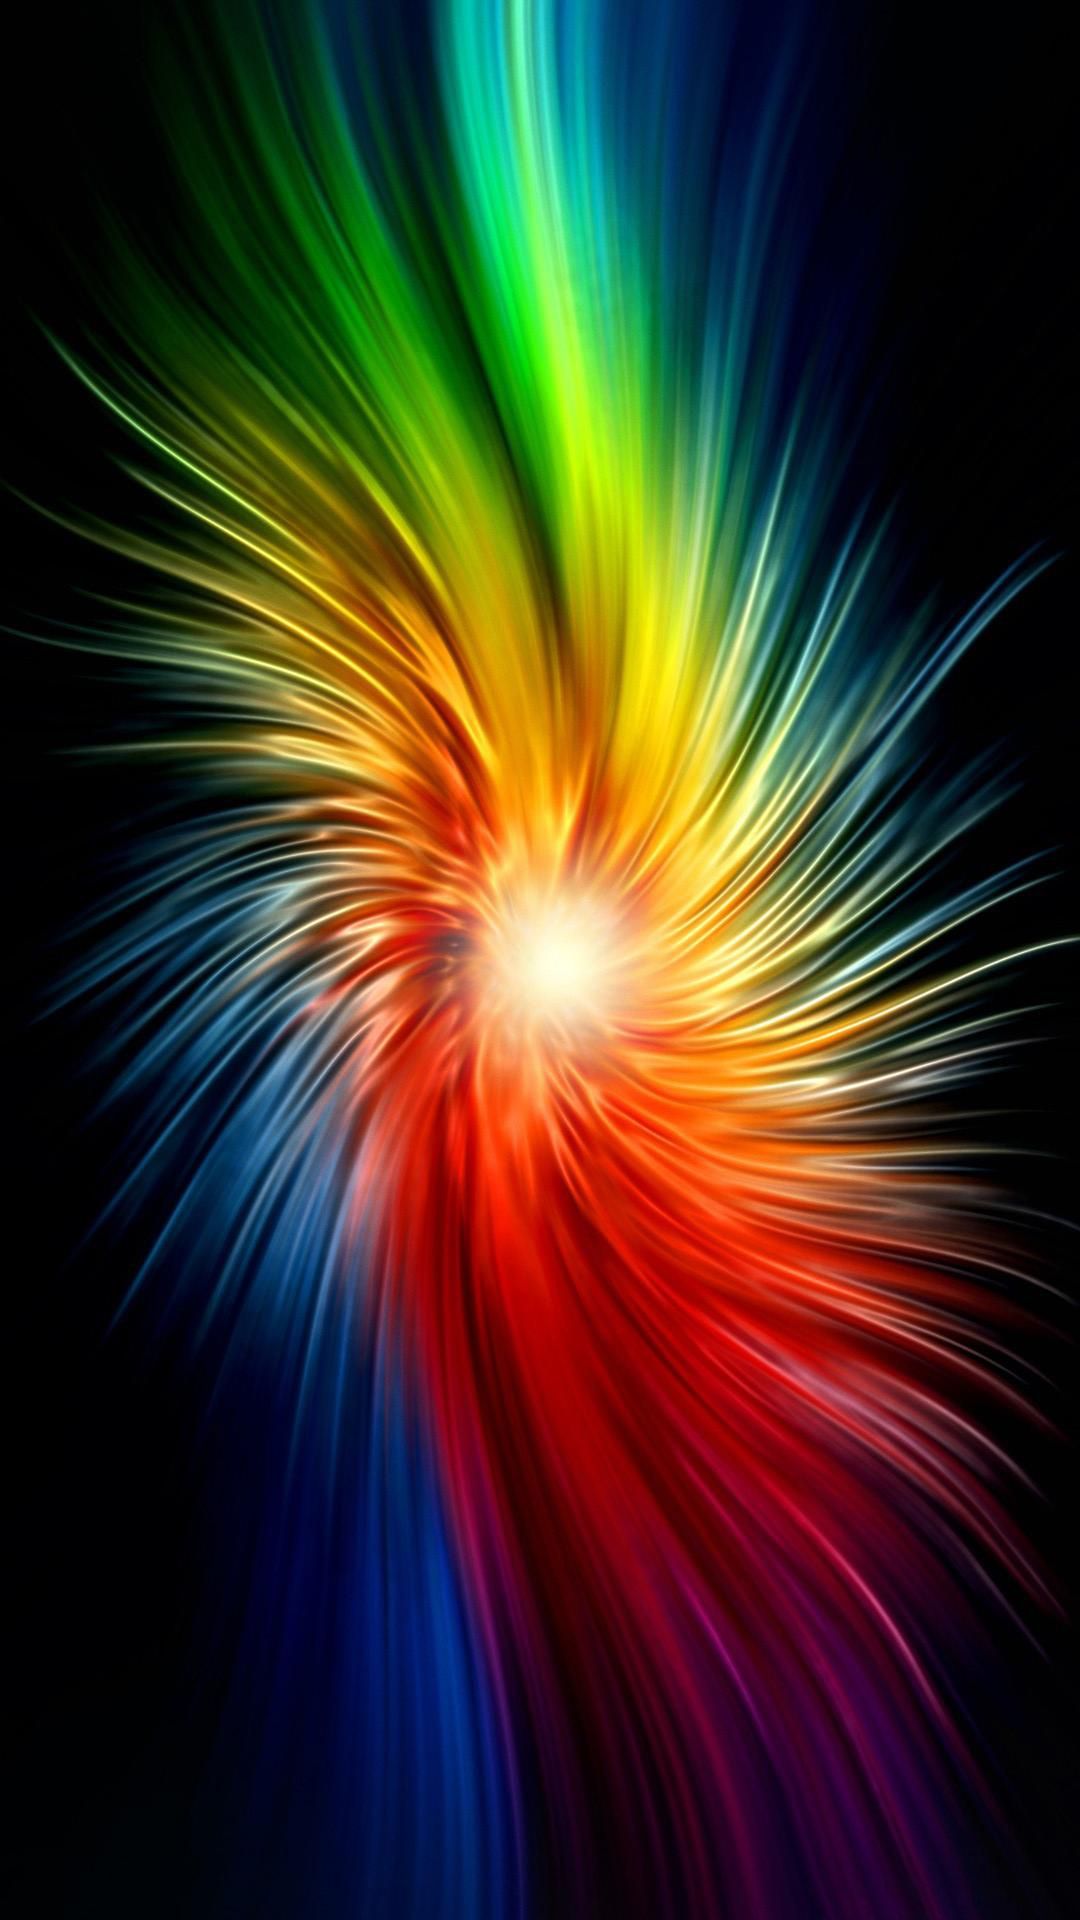 Galaxy Note HD Wallpaper: Abstract Rainbow Lockscreen Galaxy Note